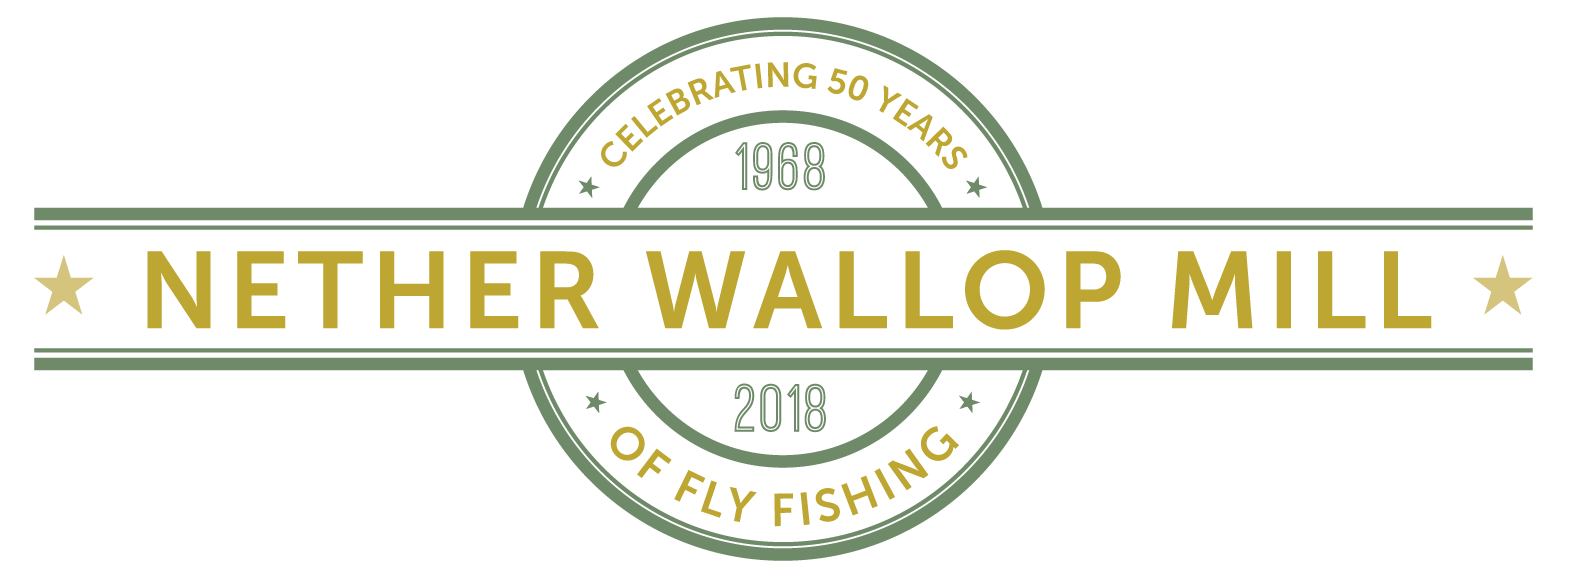 50 years fly fishing